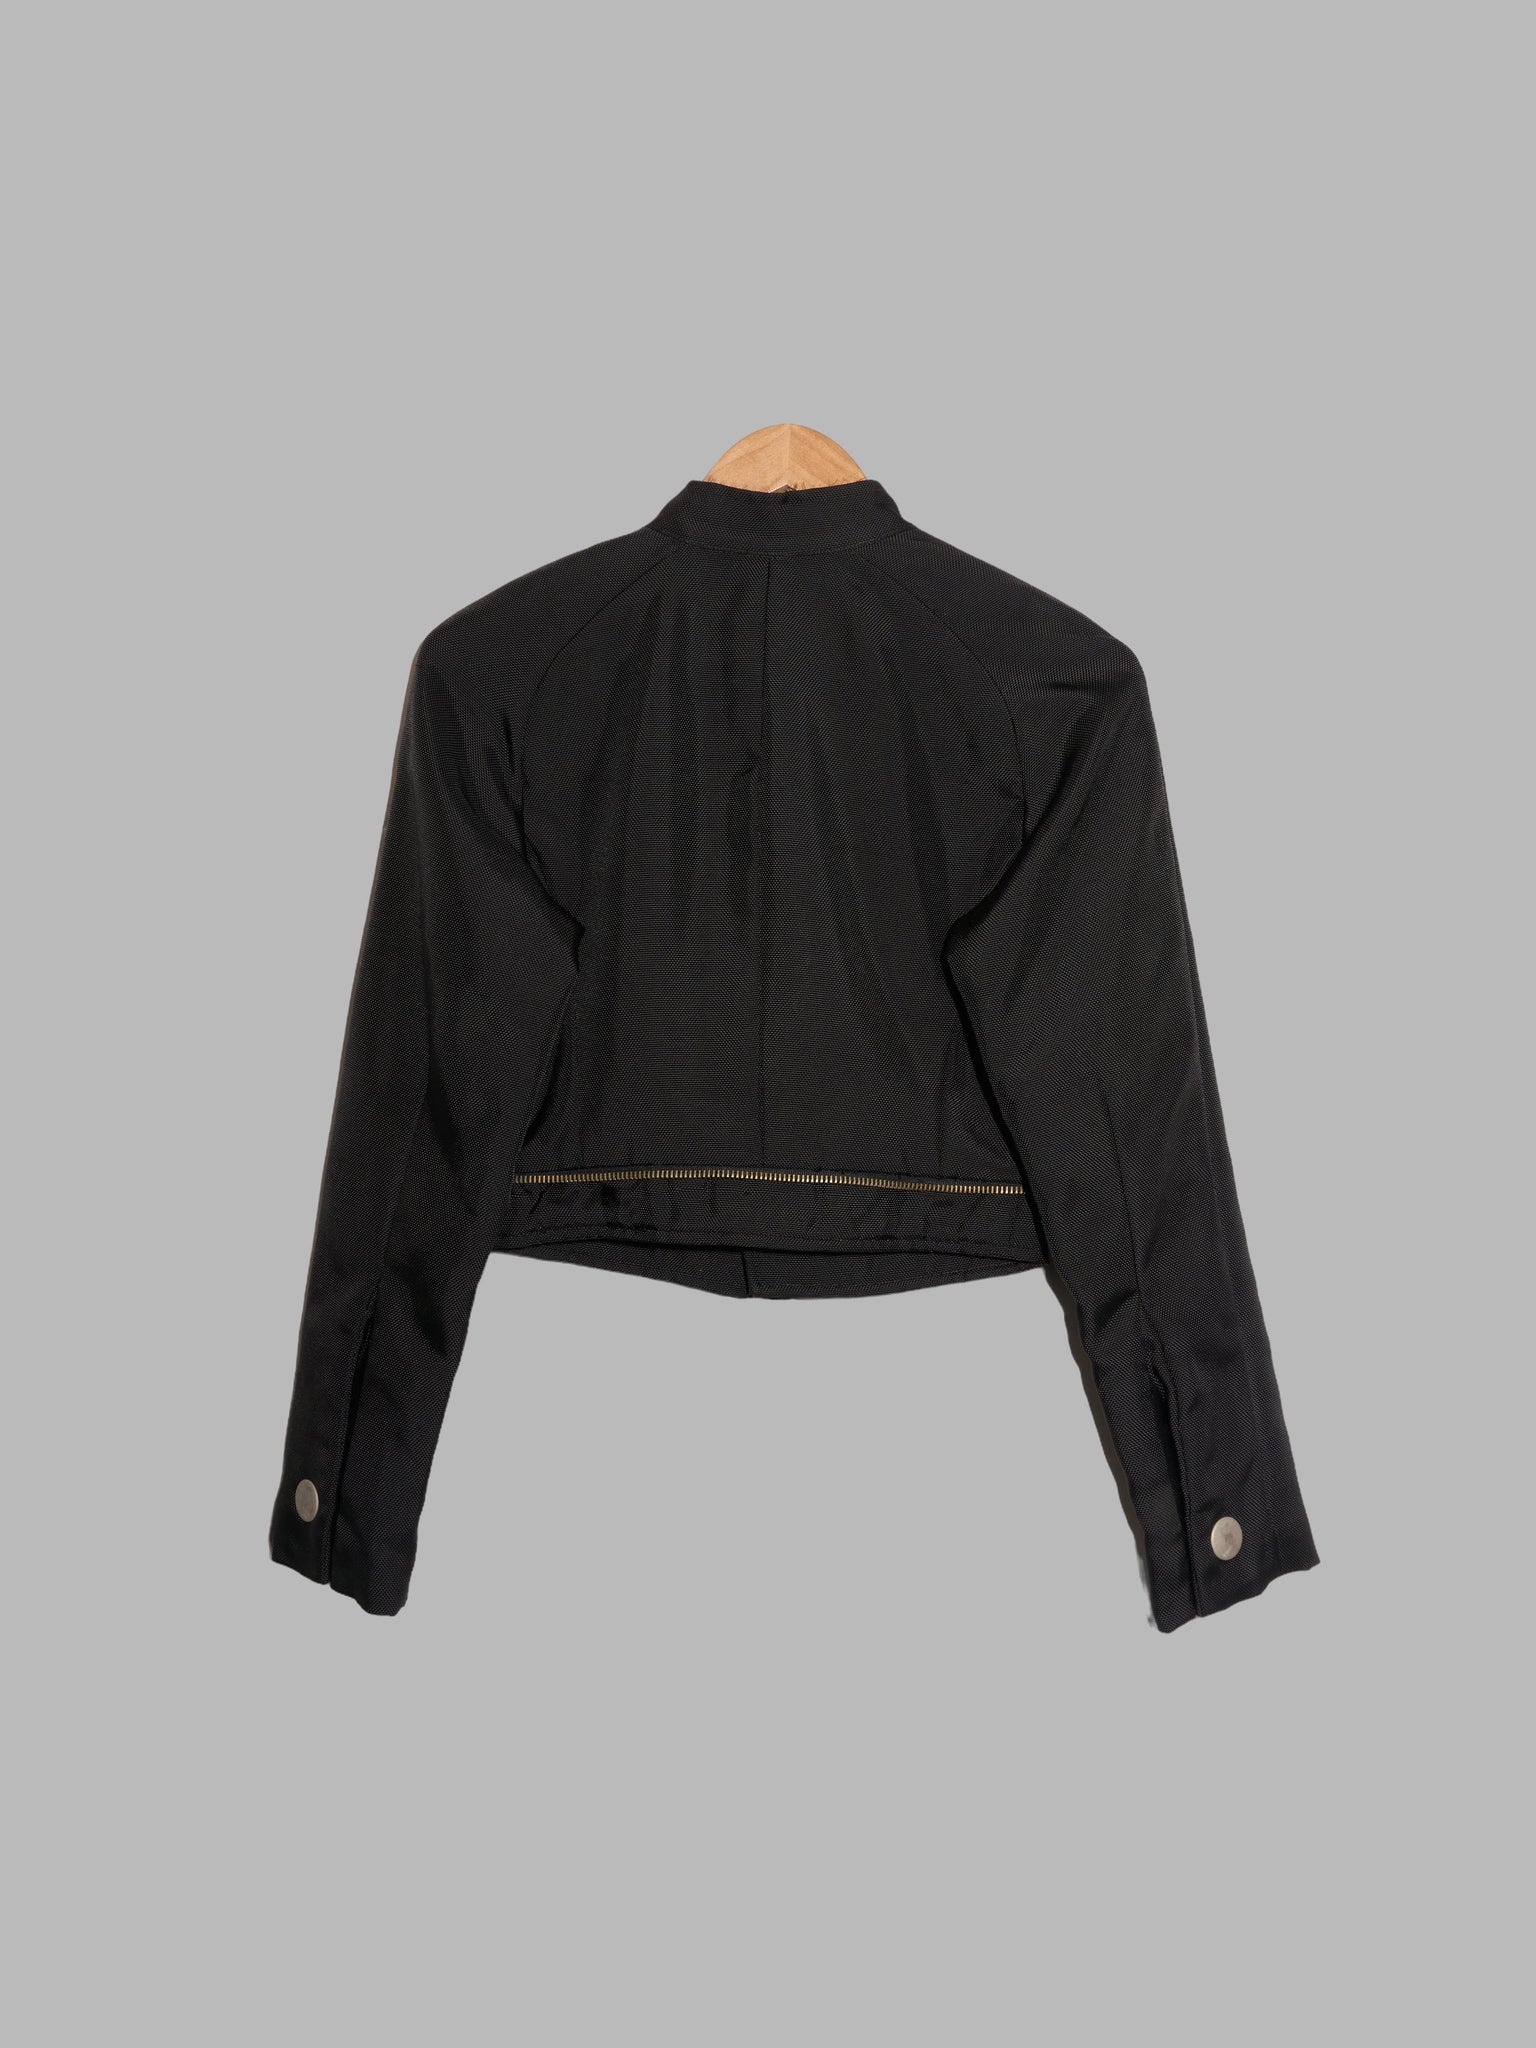 Dirk Bikkembergs winter 1996 black ballistic nylon jacket with detachable hem